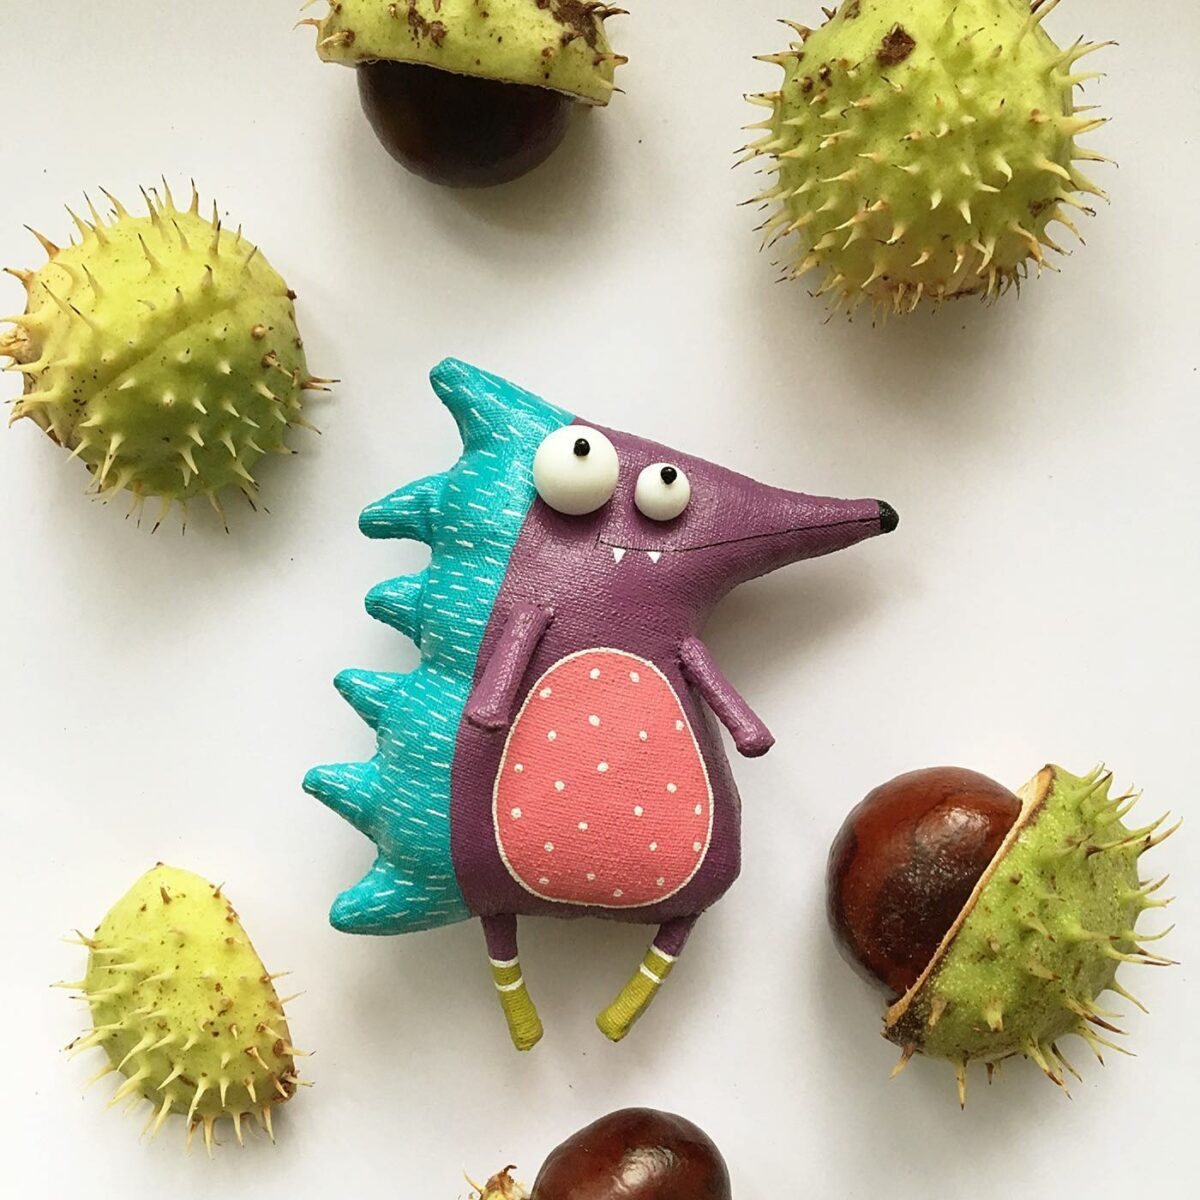 Colorful Handmade Toys Of Quirky Creatures By Lidiya Marinchuk (4)